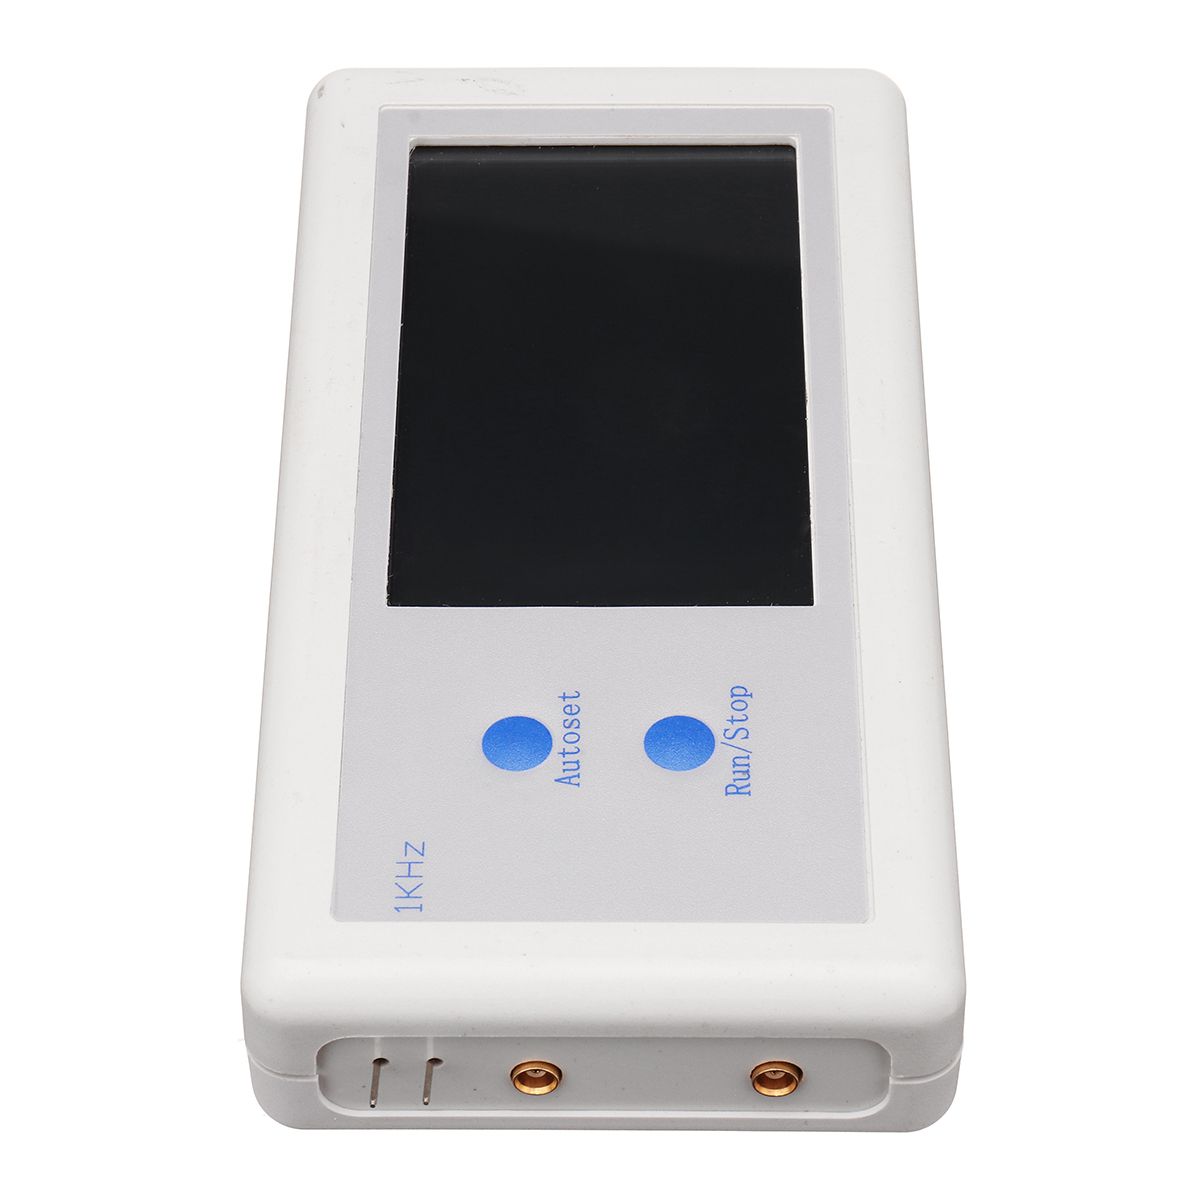 D602-200KHz-2-Channel-Oscilloscope-Mini-Pocket-Sized-Handheld-Touch-Panel-LCD-Digital-Oscilloscope-1245367